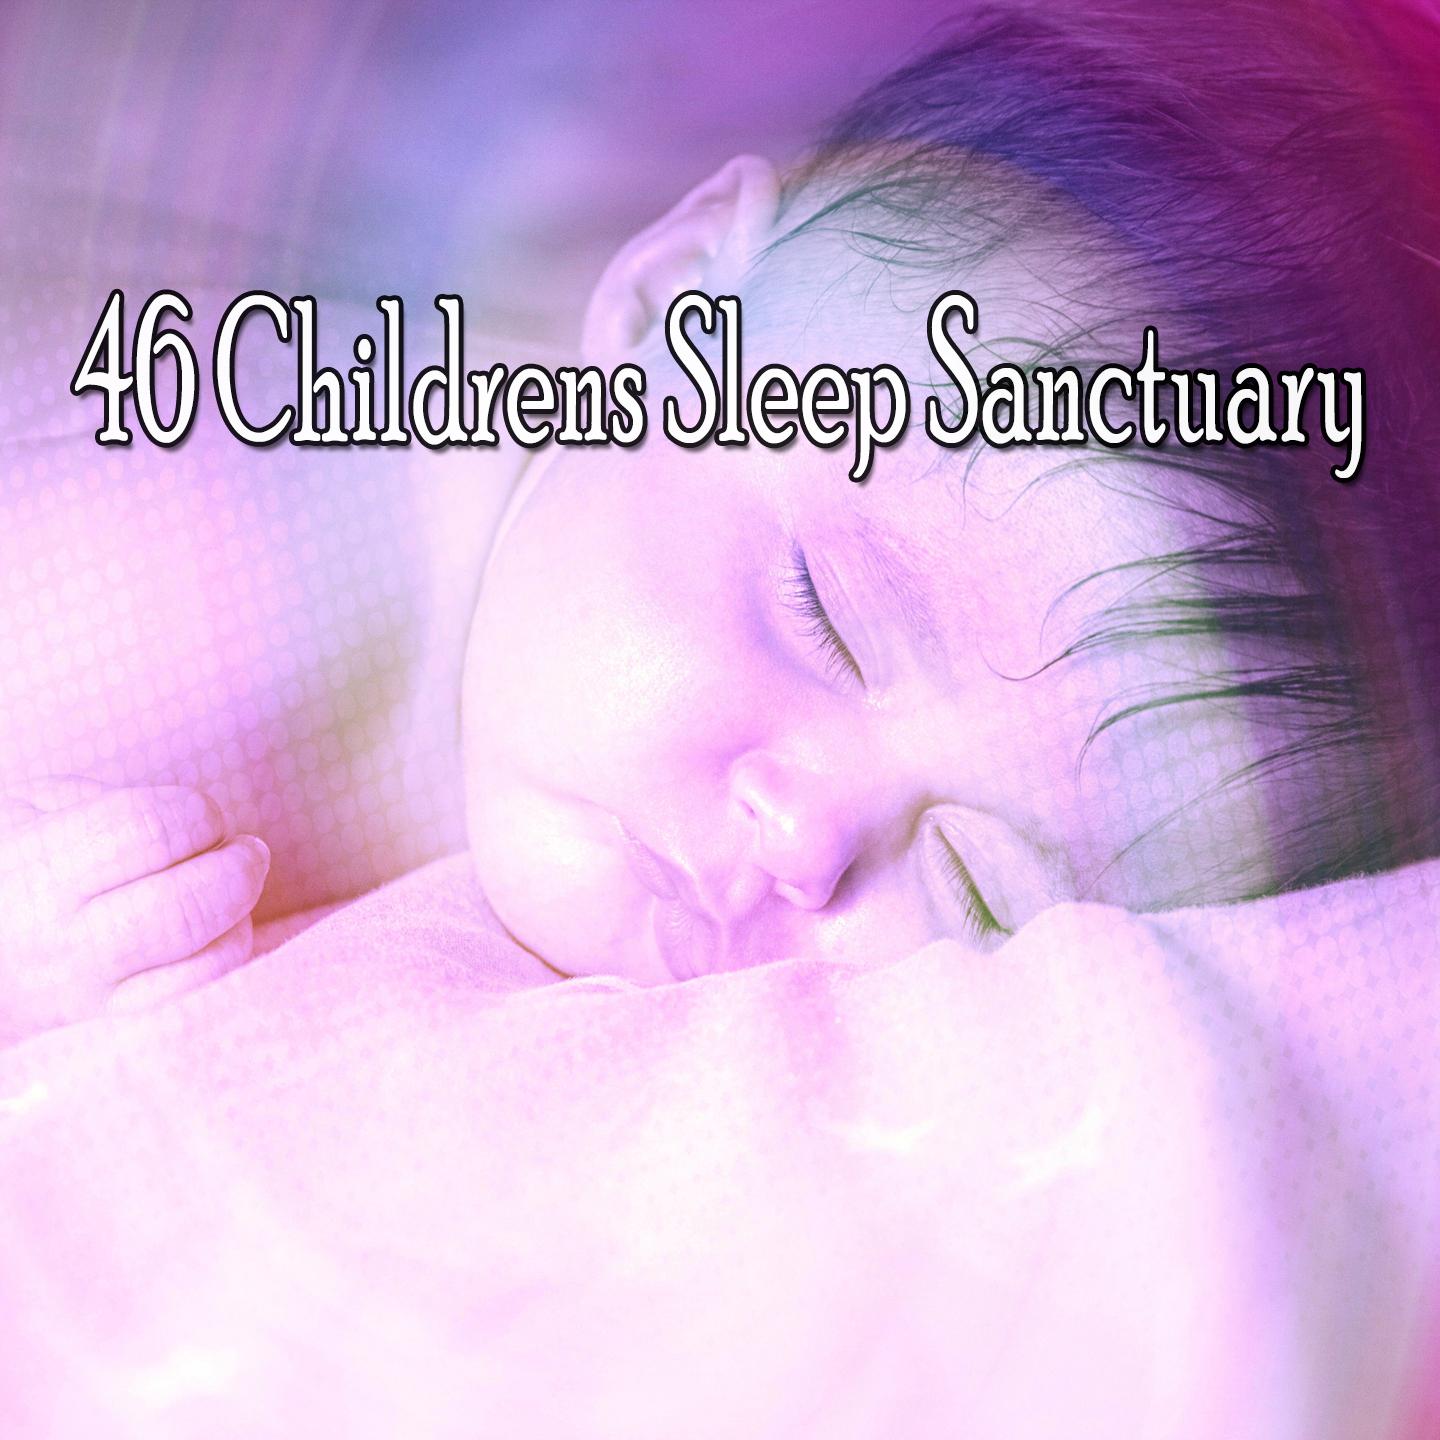 46 Childrens Sleep Sanctuary